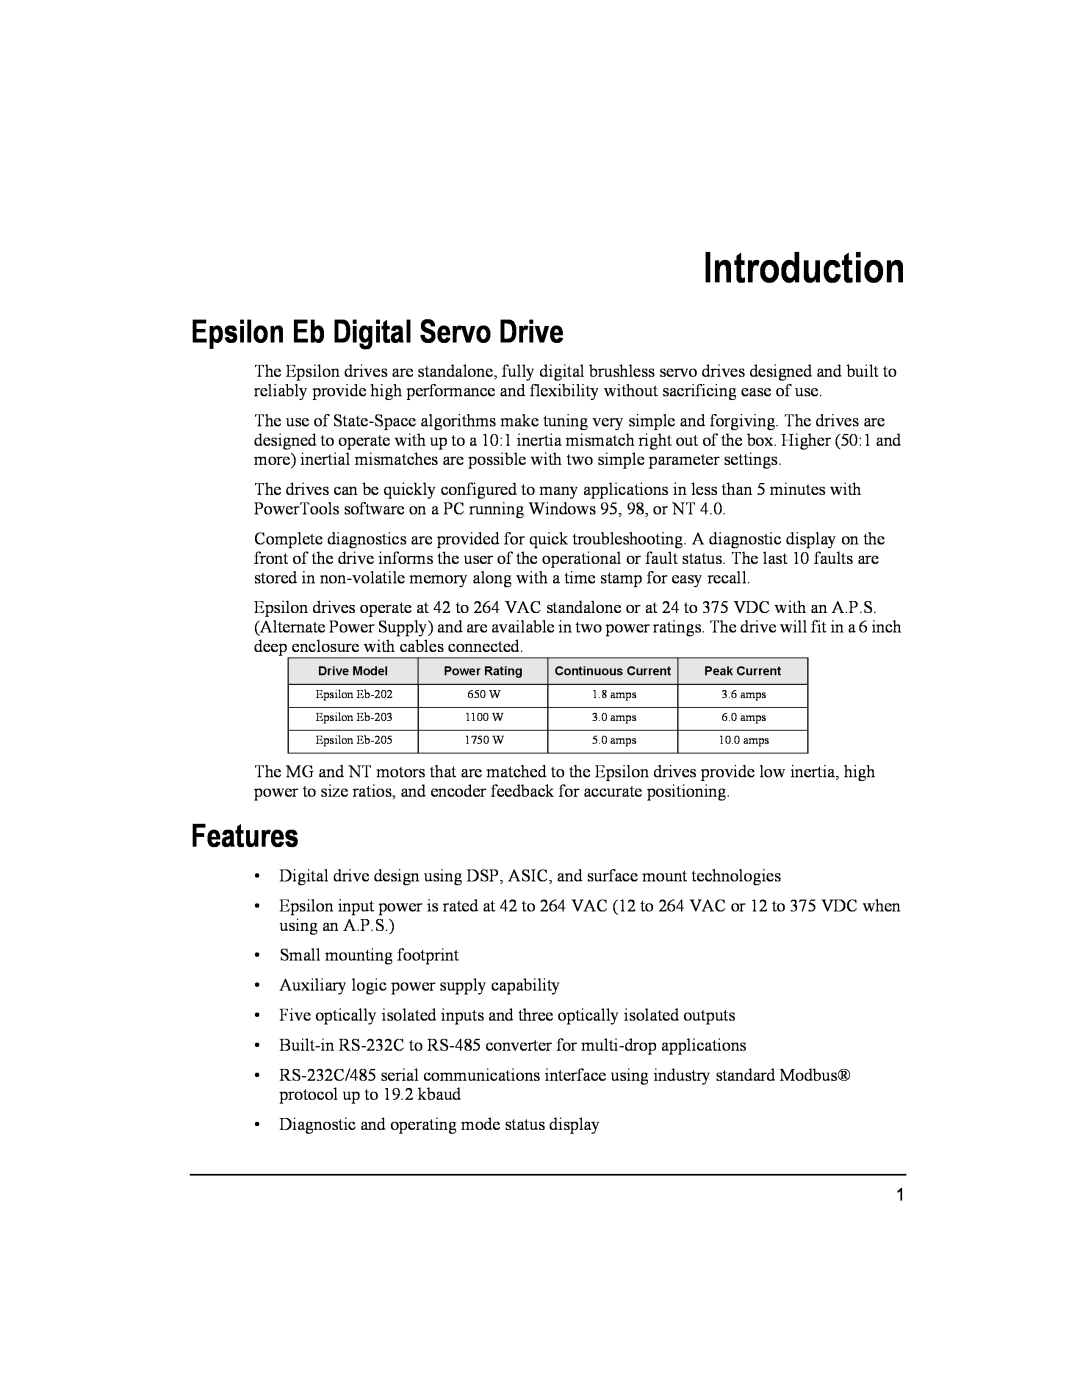 Emerson Epsilon Eb Digital Servo Drive, 400501-05 installation manual Introduction, Features 